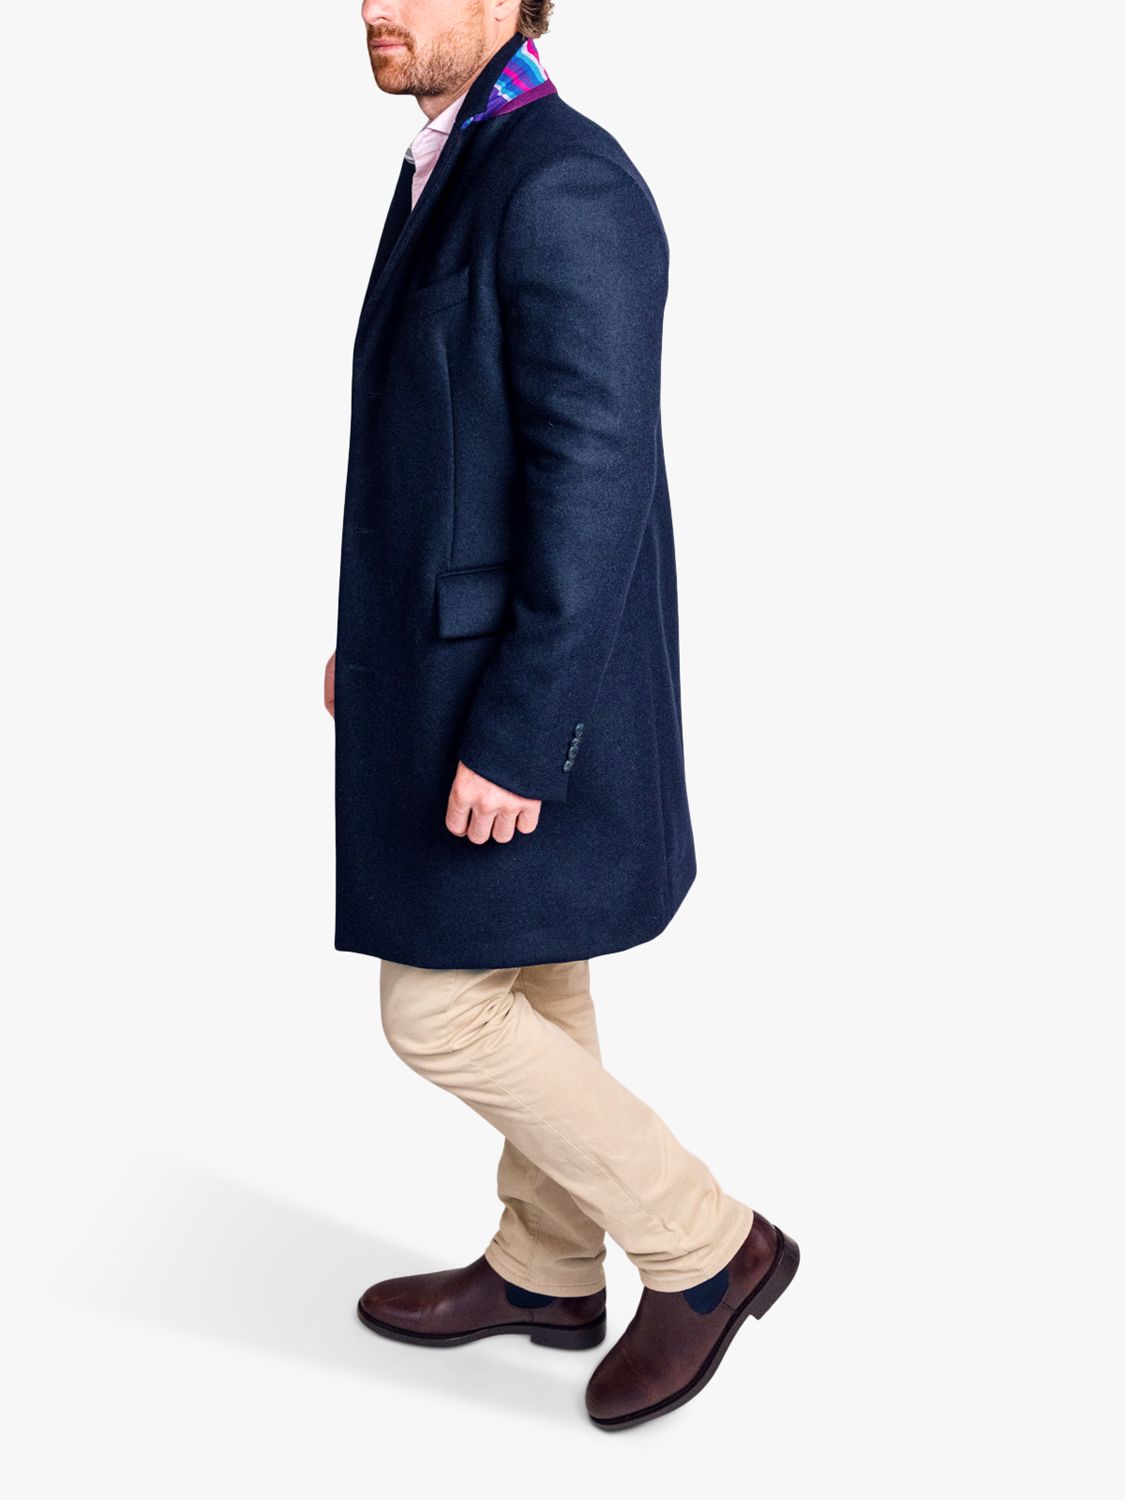 KOY Heritage British Wool Tailored Fit Overcoat, Navy, 38R